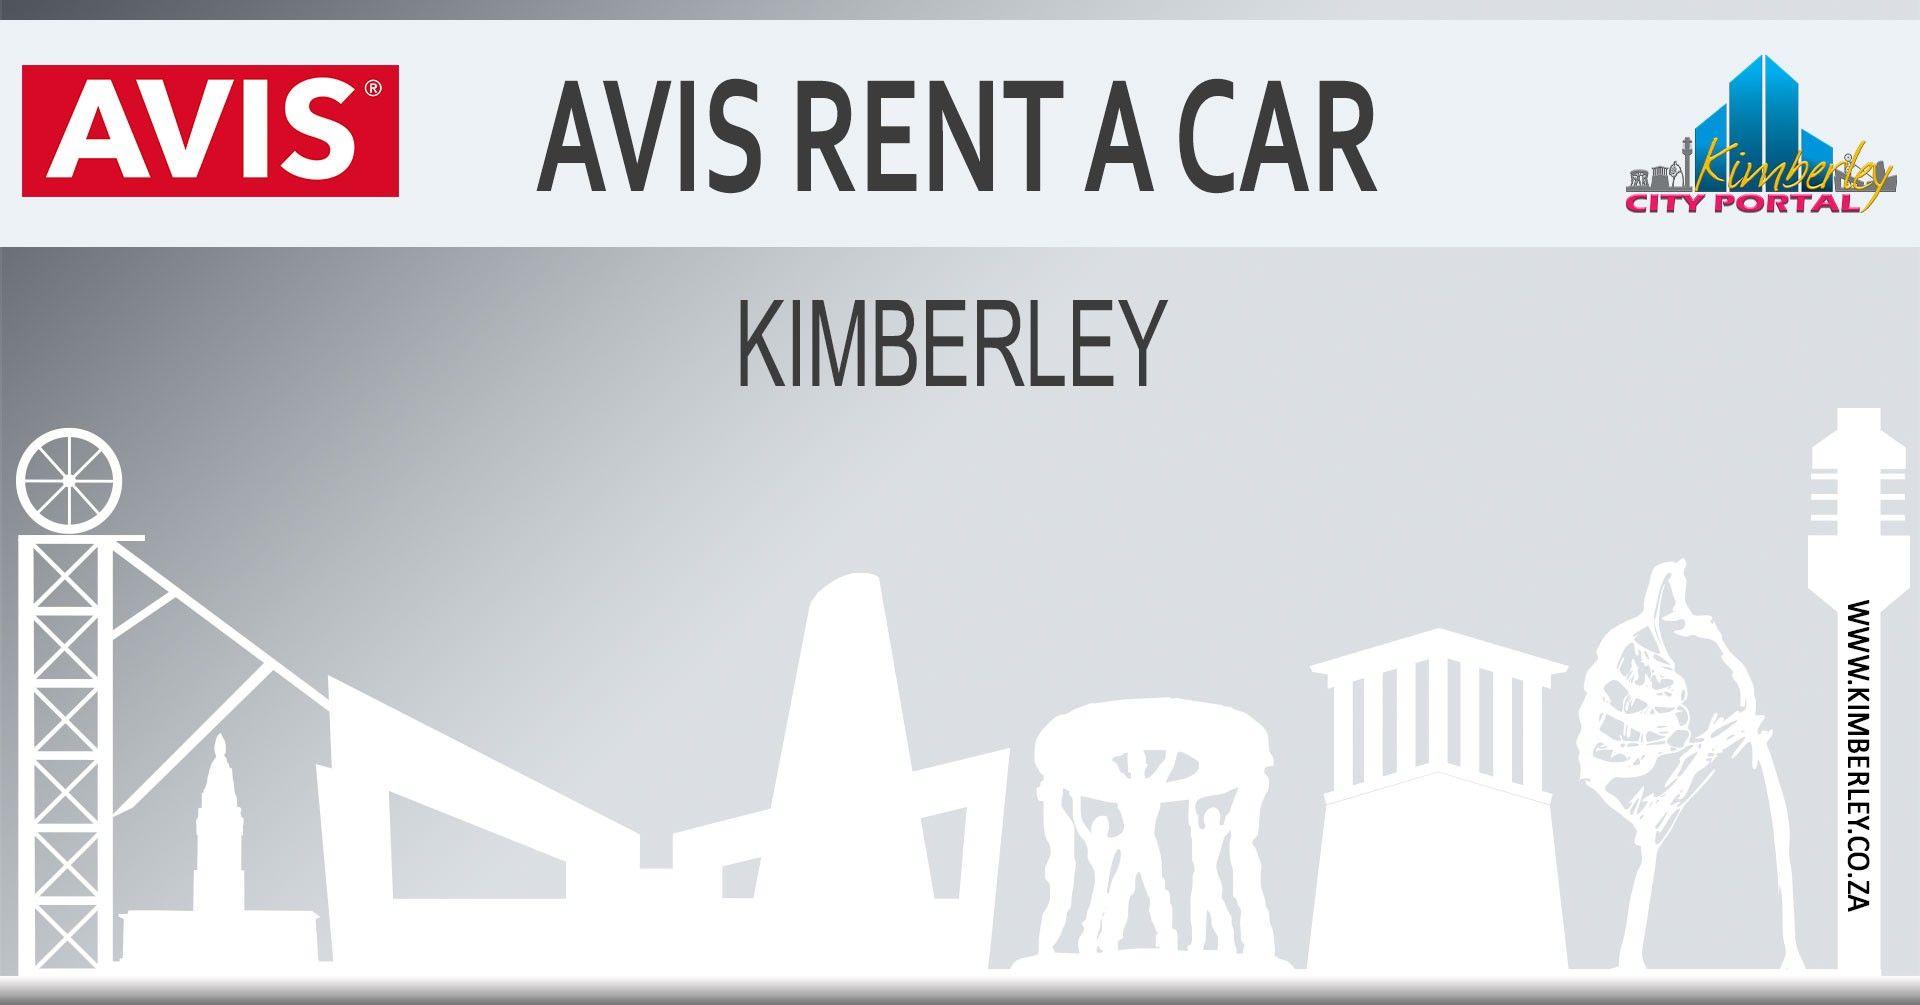 Avis Rent a Car Logo - AVIS Rent a Car - Kimberley • Kimberley • CITY PORTAL